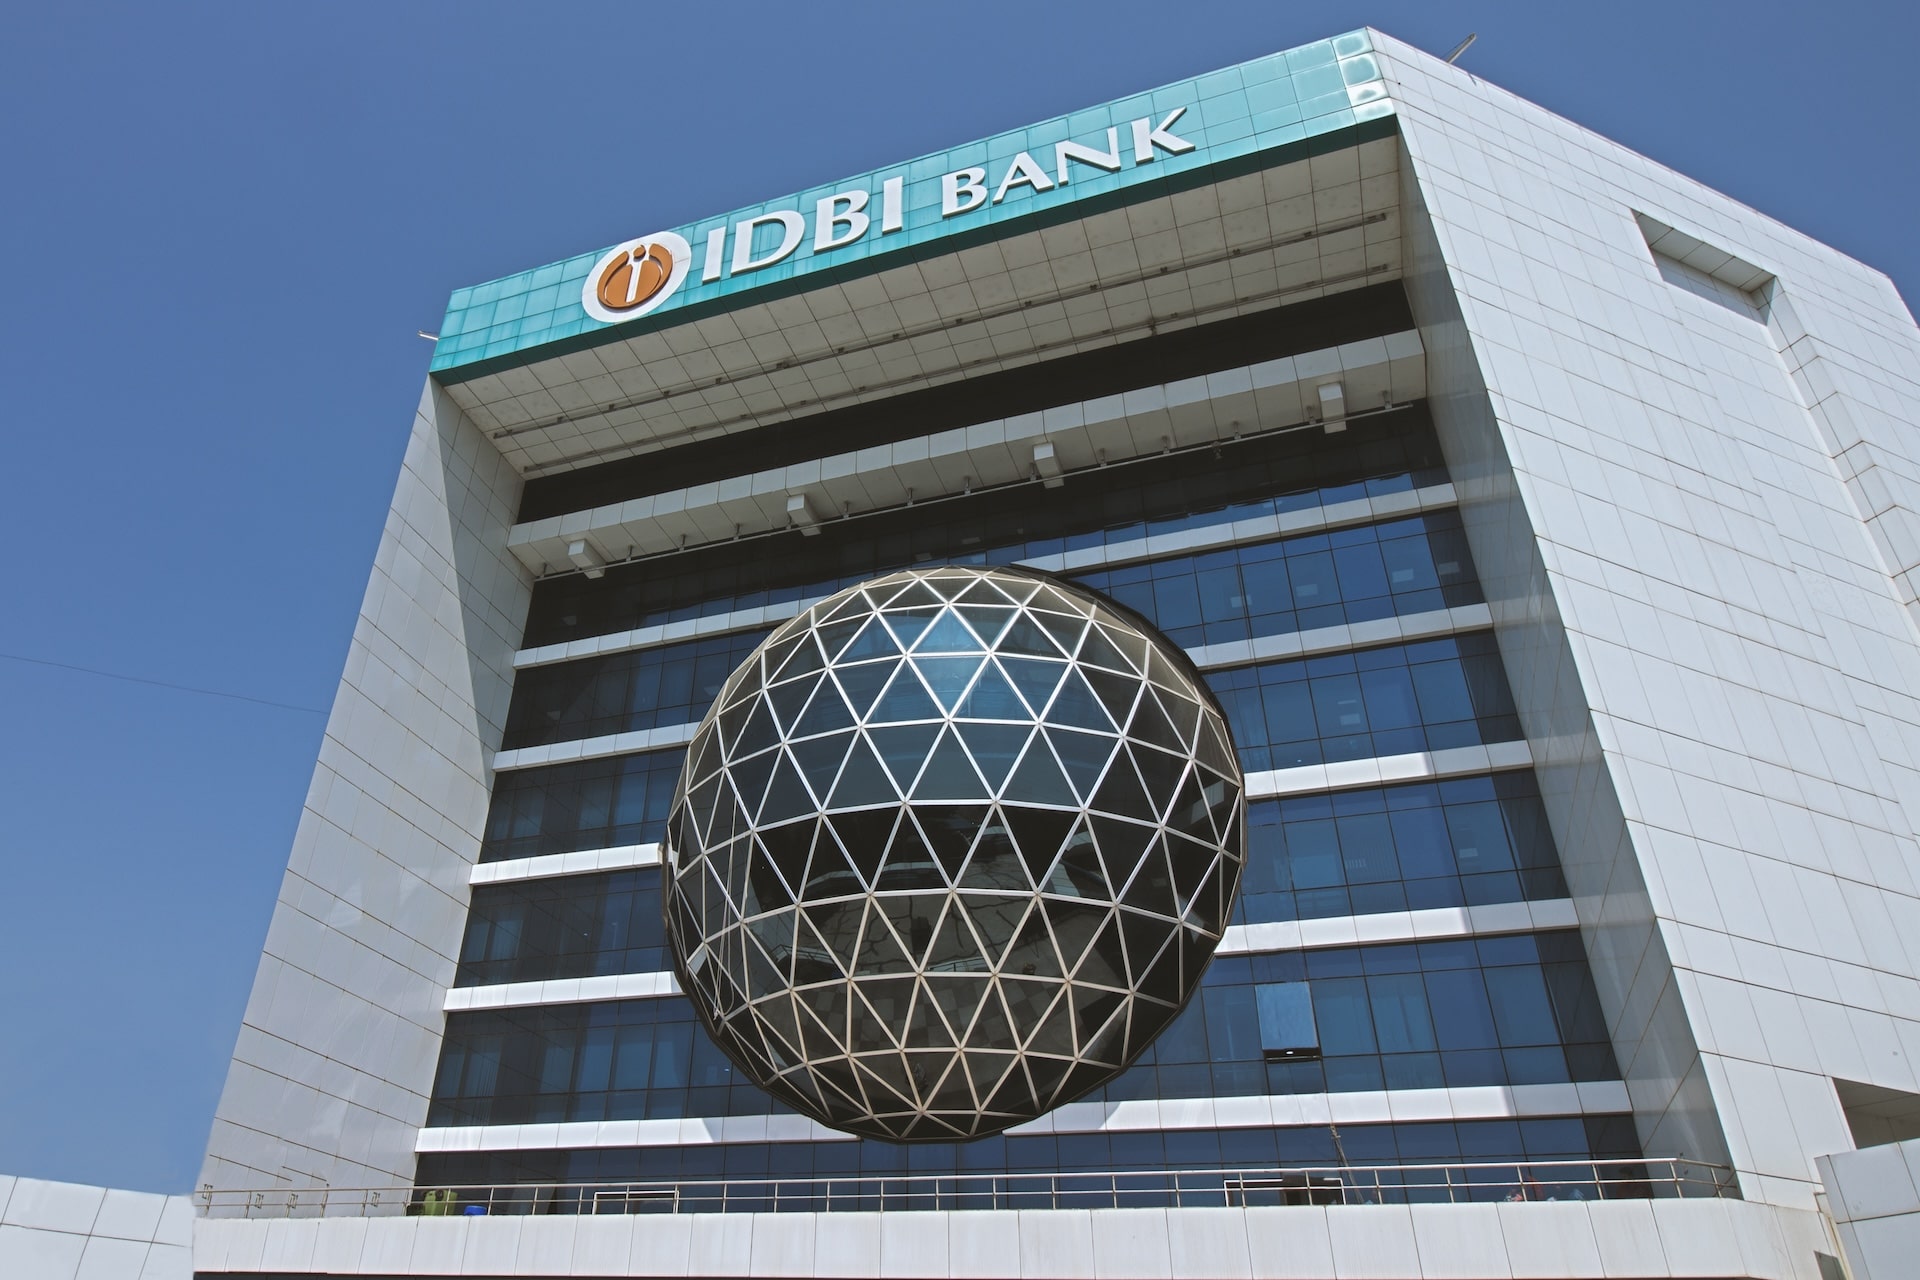 IDBI Bank Annex Building, CBD